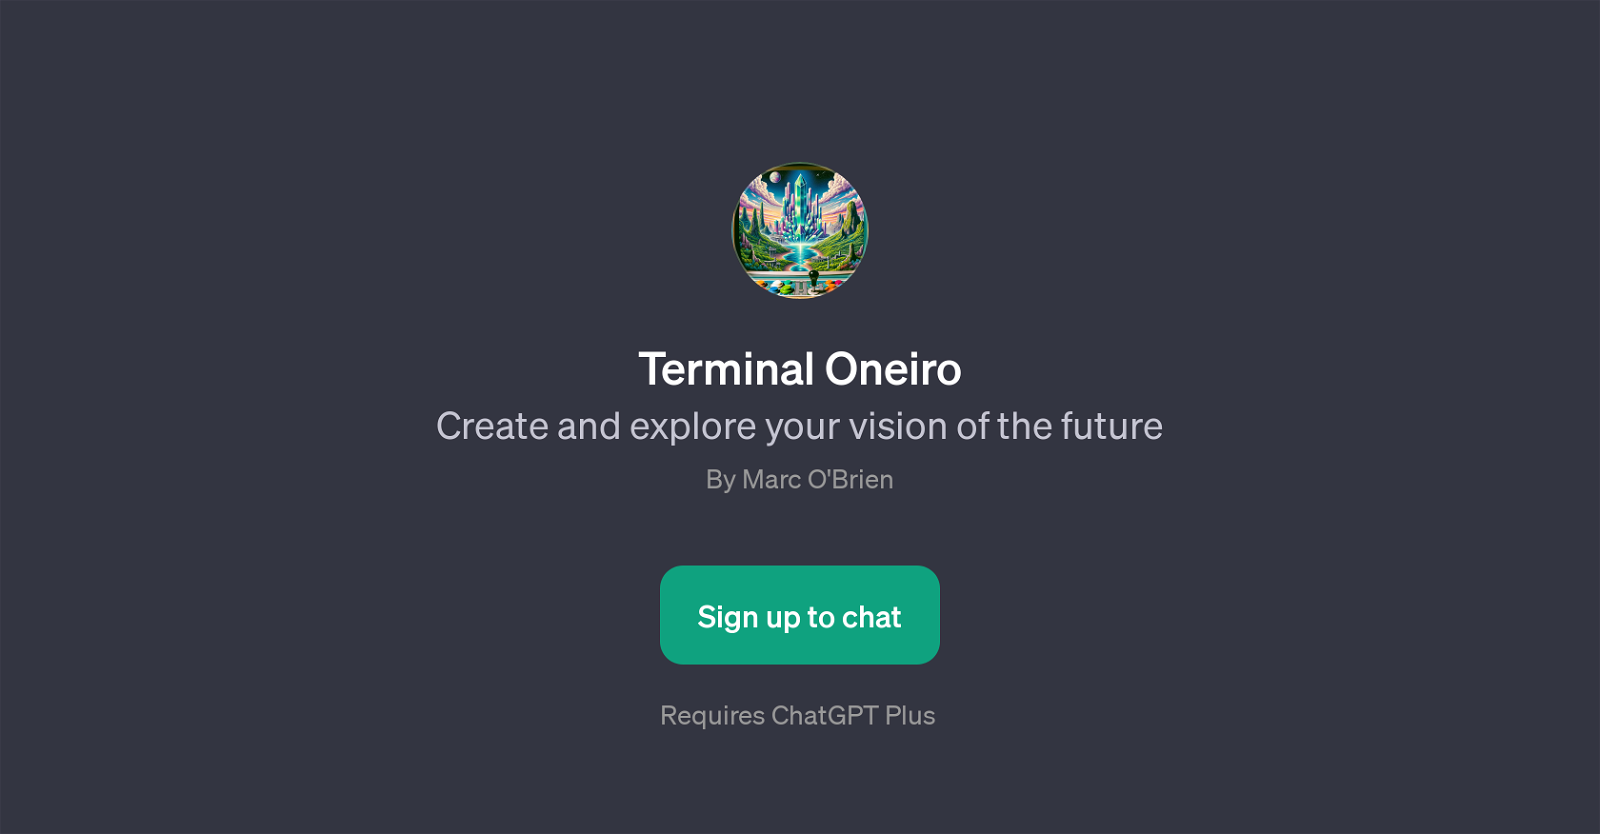 Terminal Oneiro website